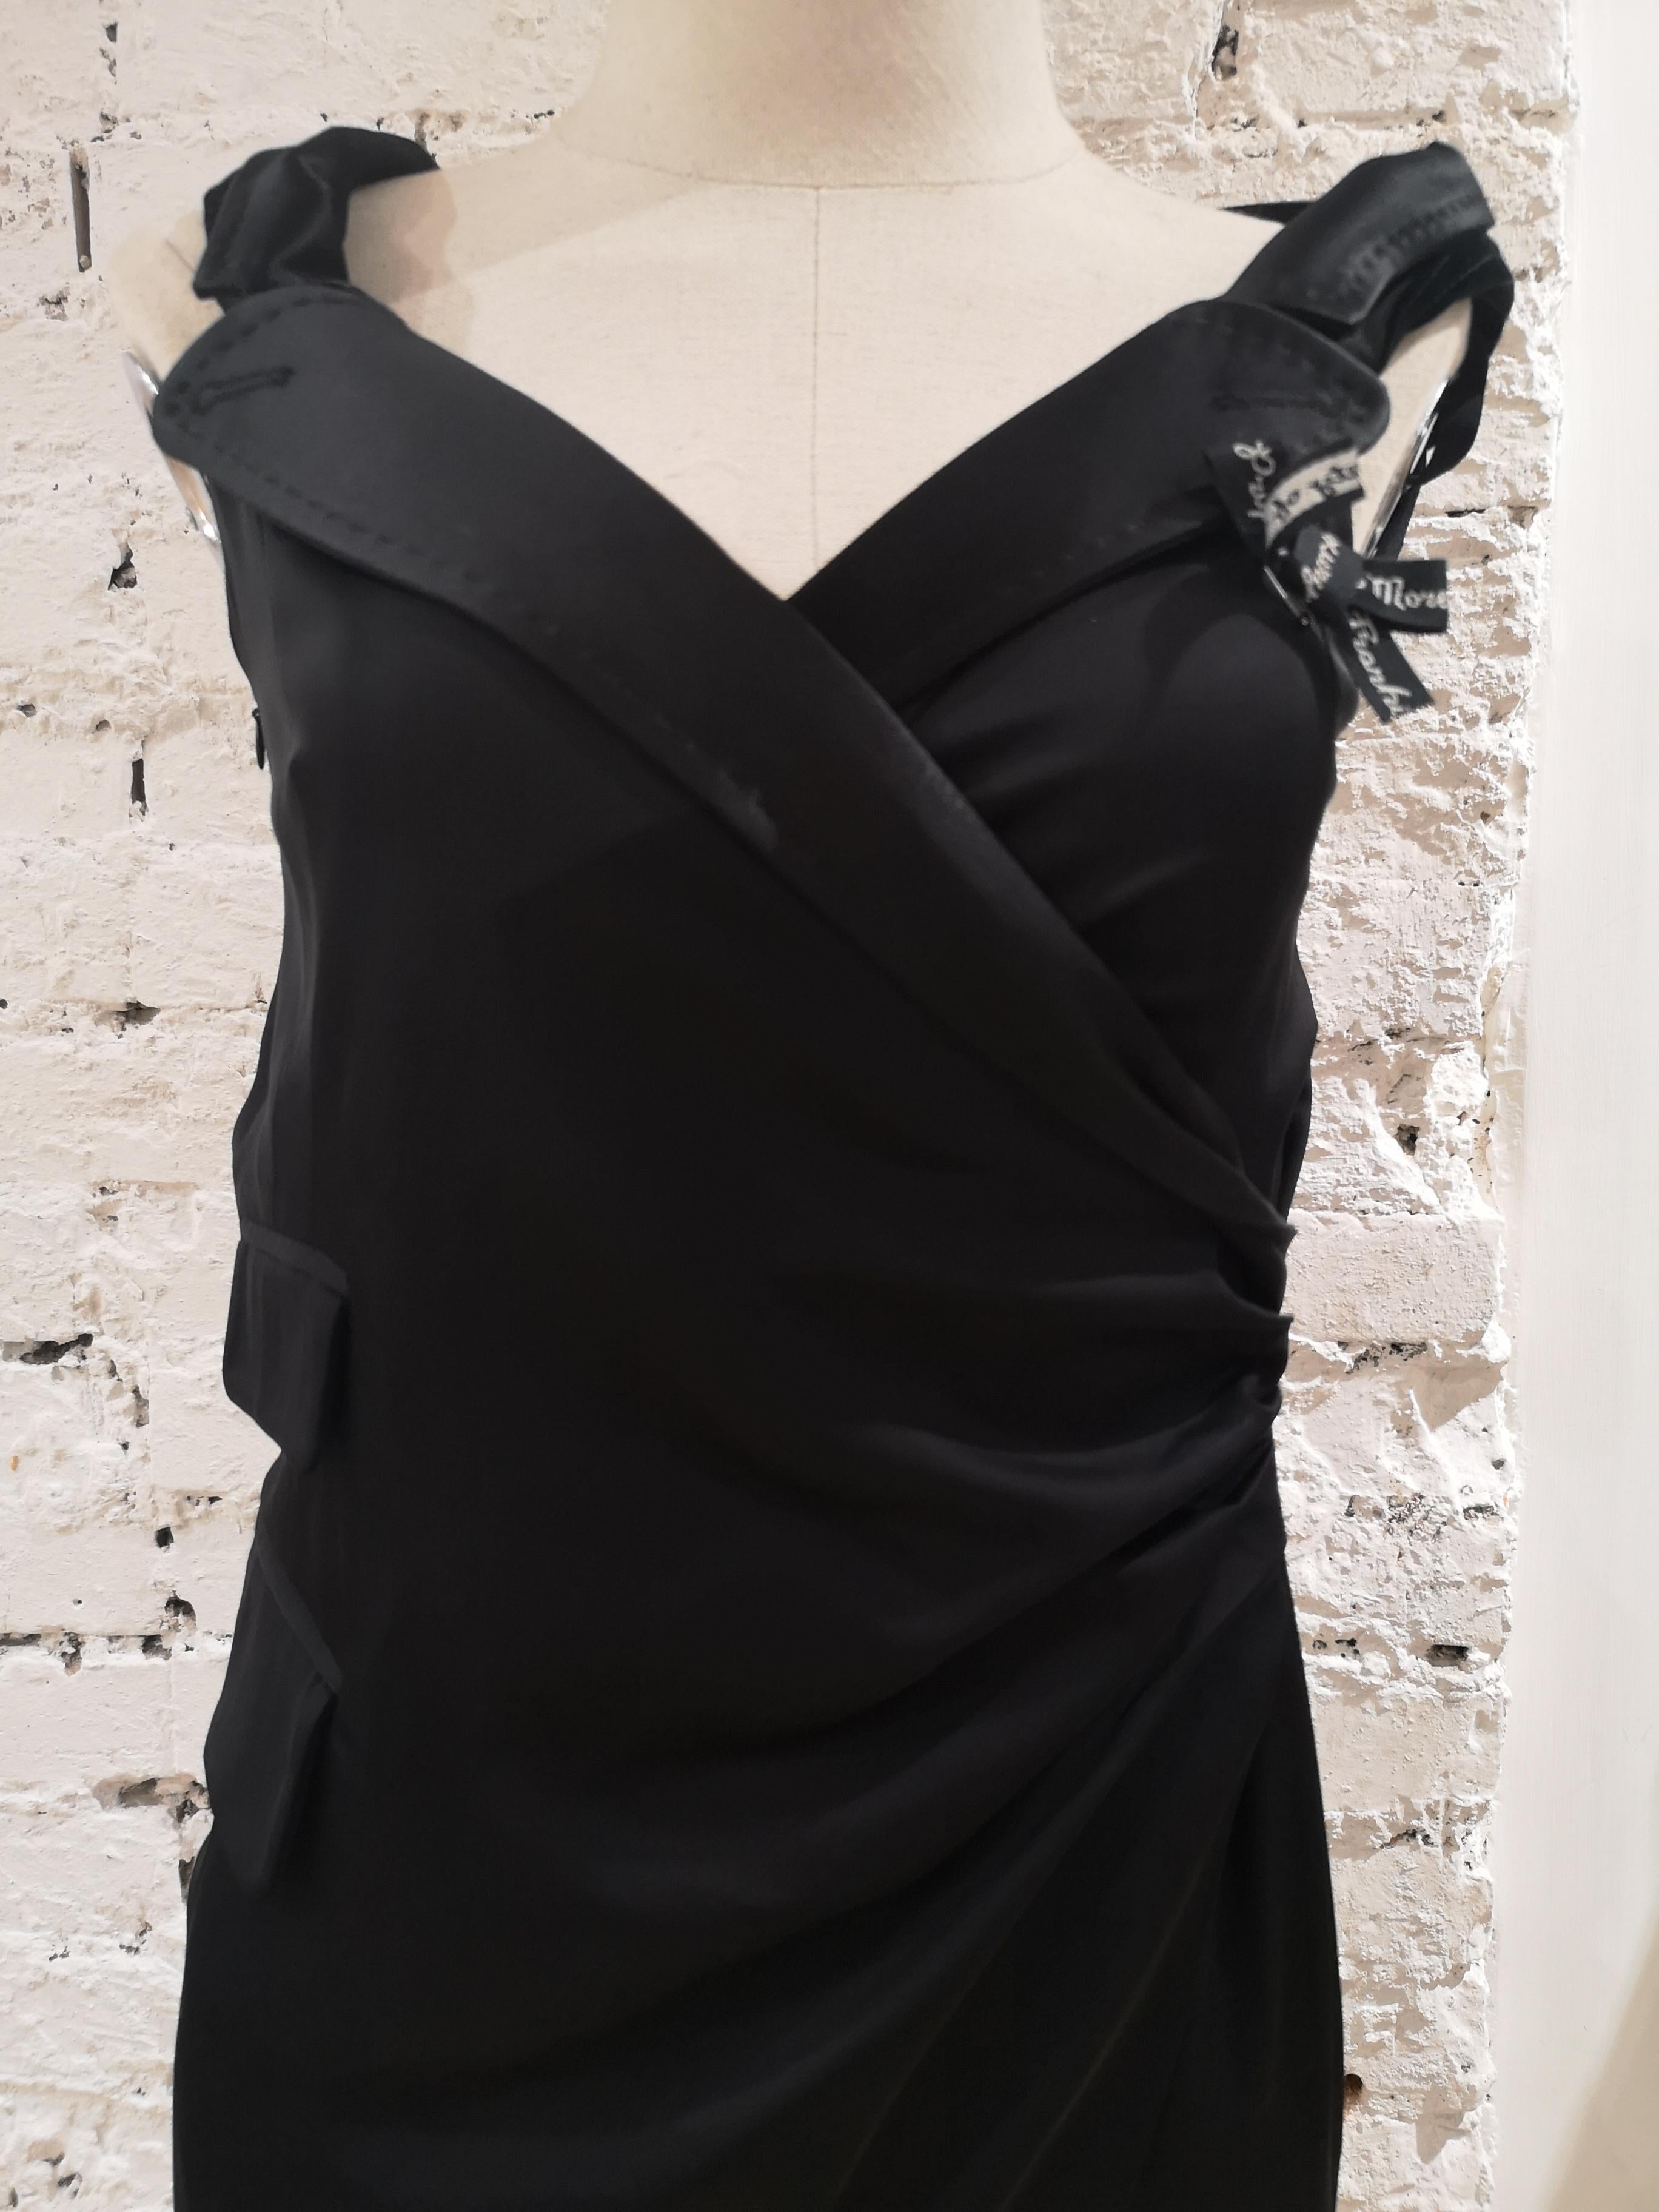 Frankie Morello black dress
Size S